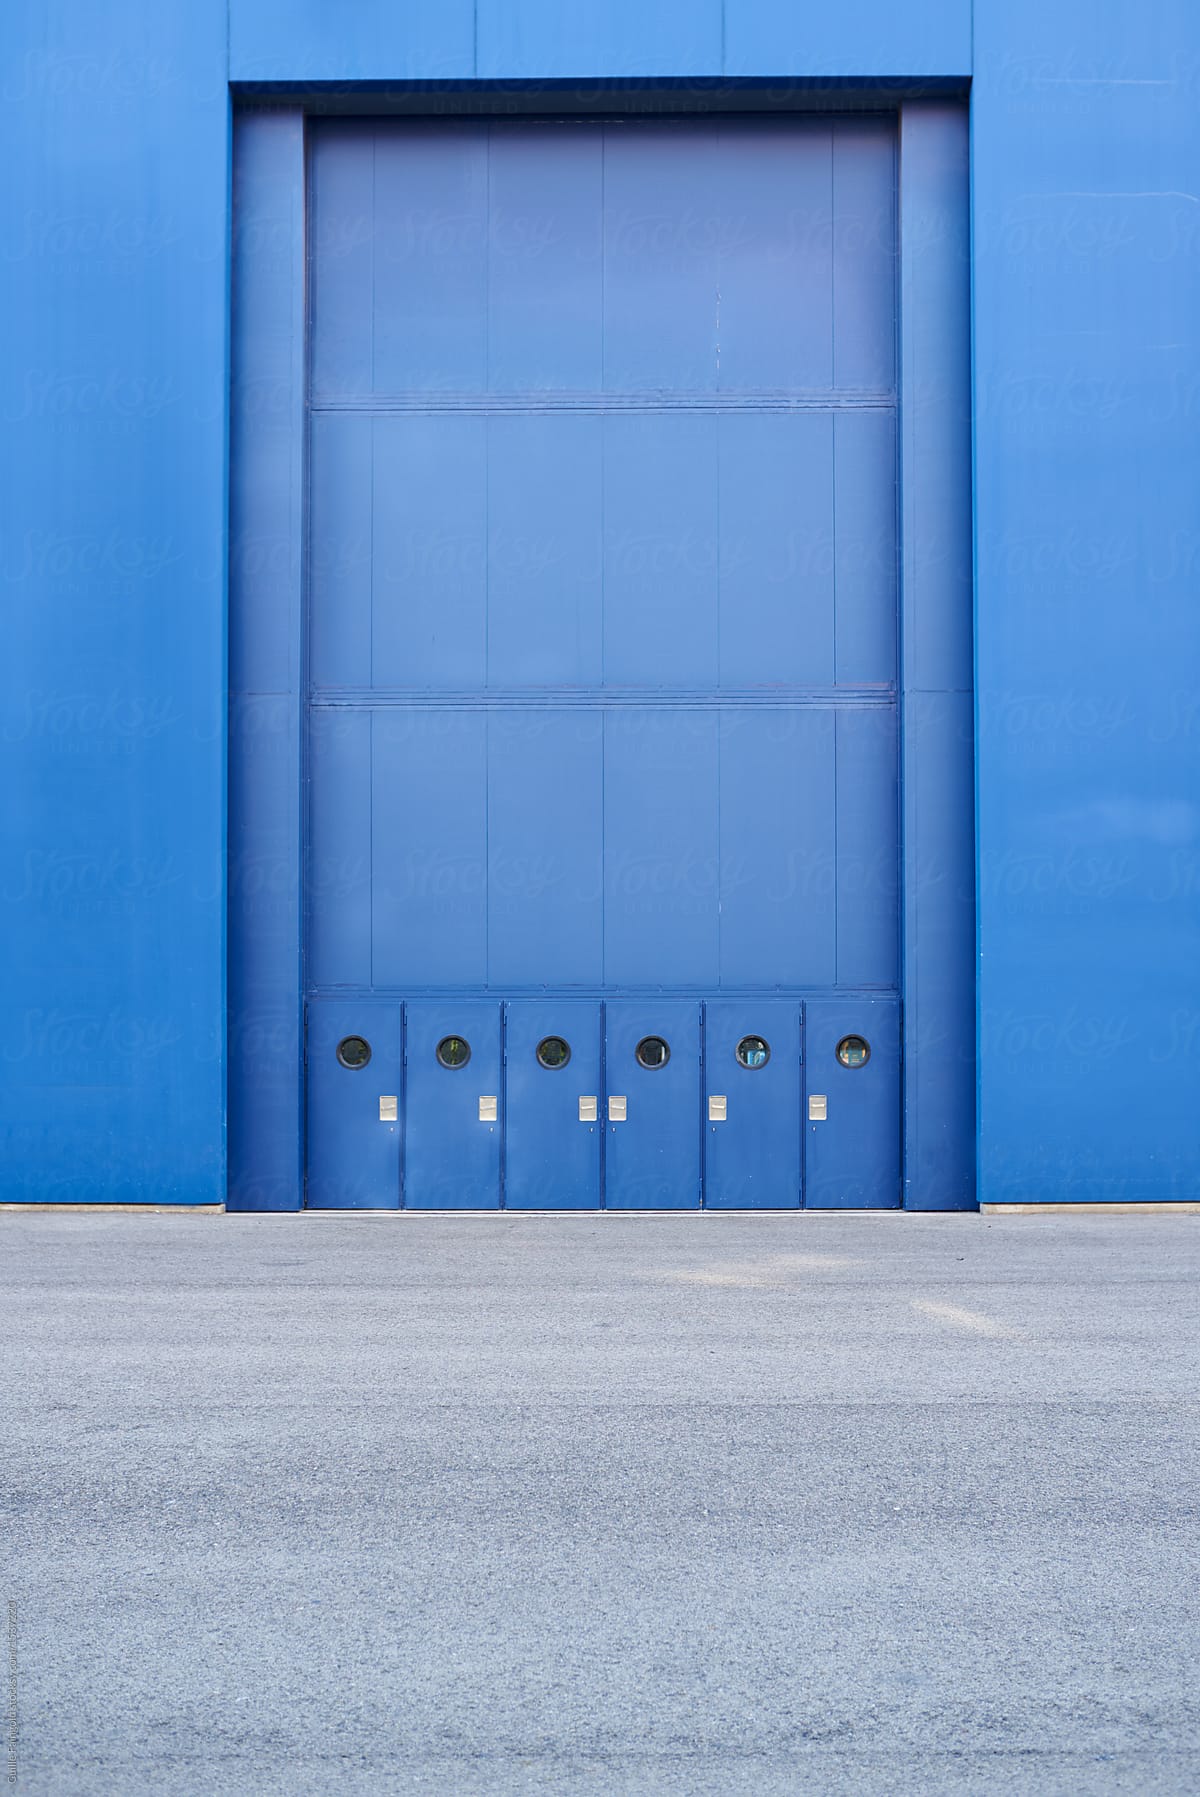 Rectangular garage entrance in blue wall.